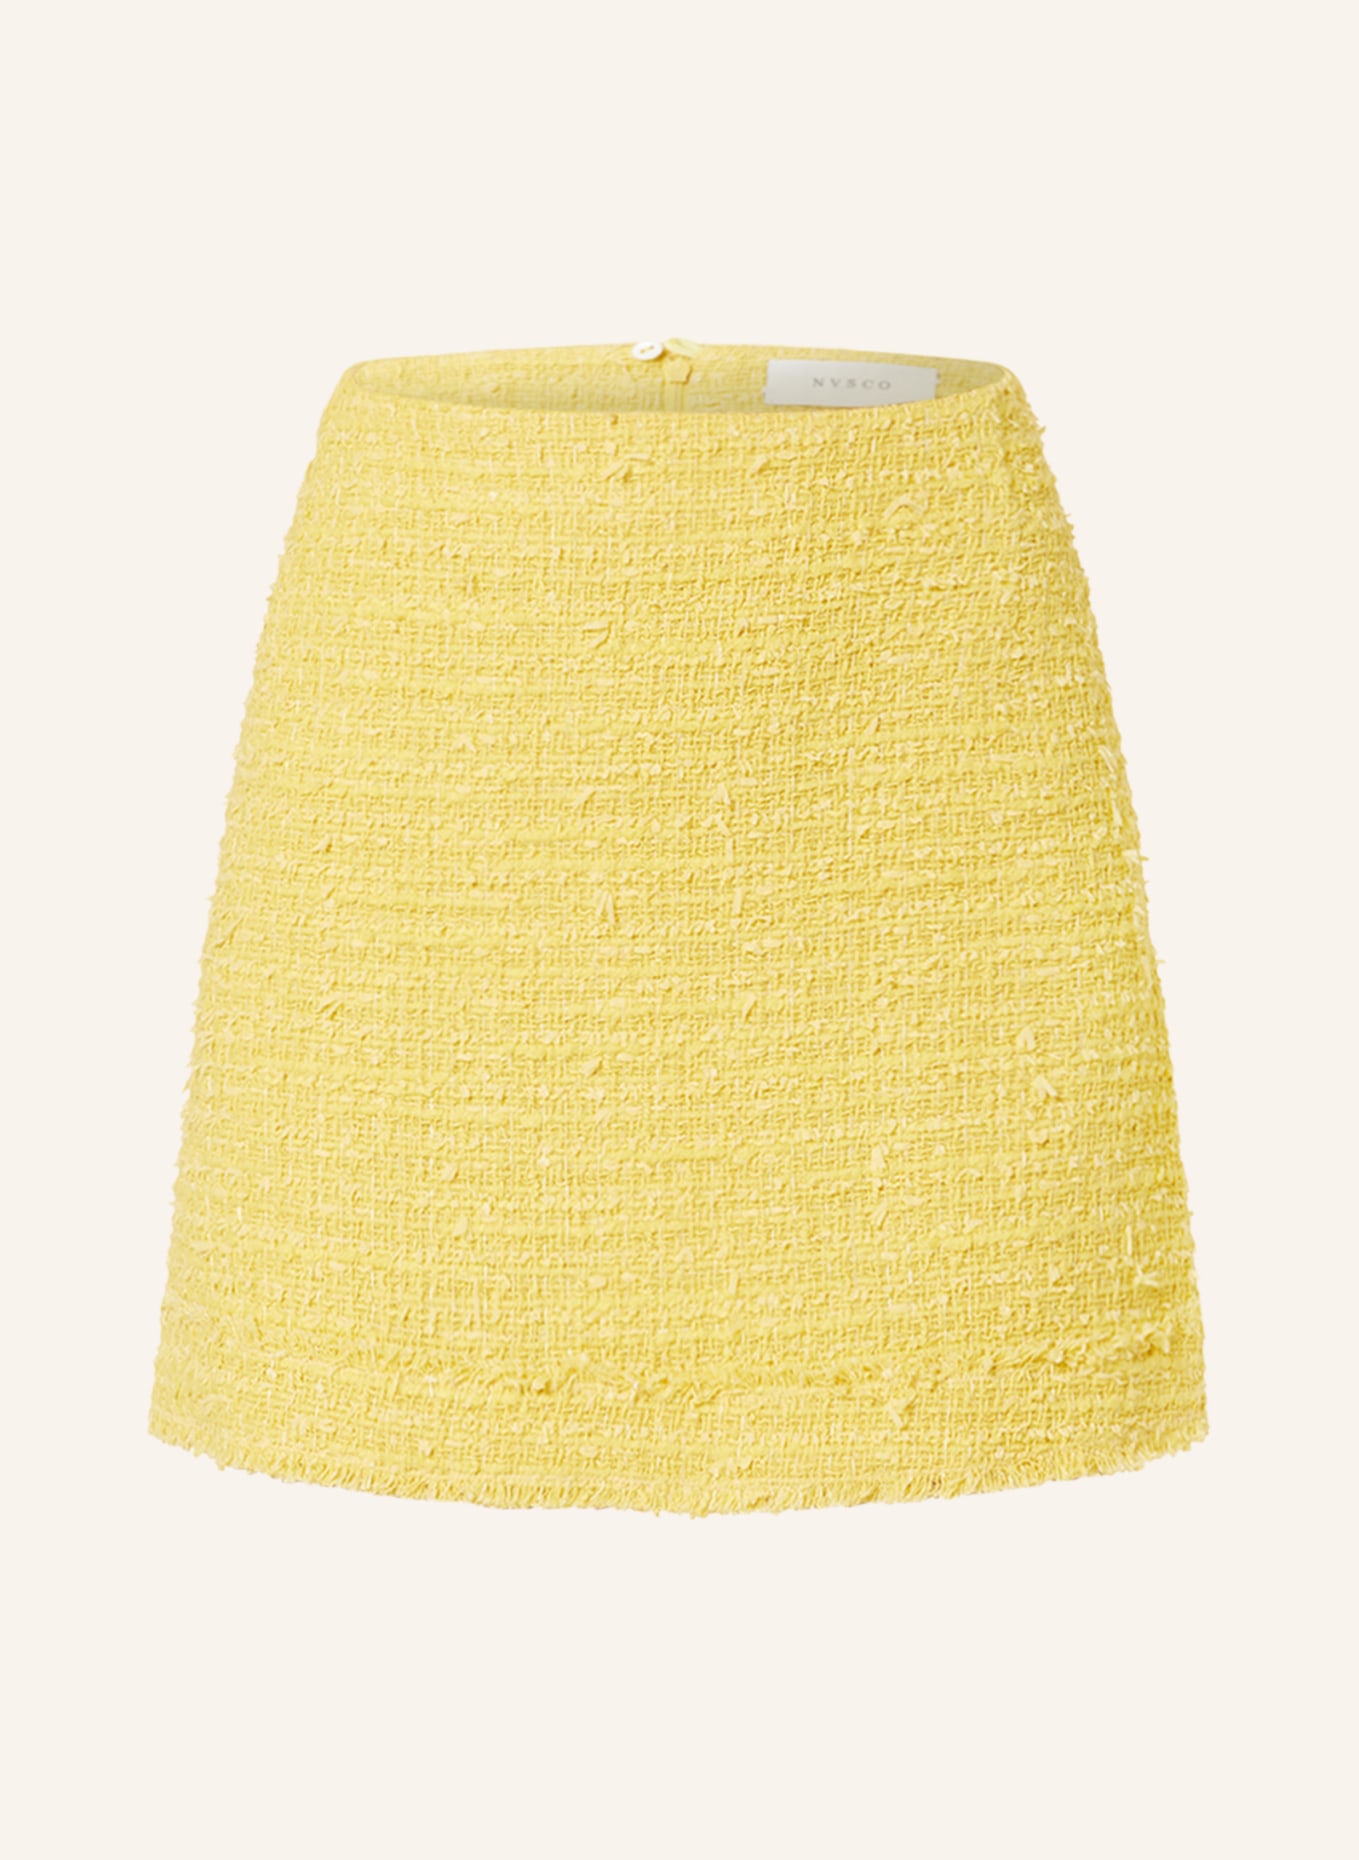 NVSCO Tweed skirt, Color: YELLOW (Image 1)